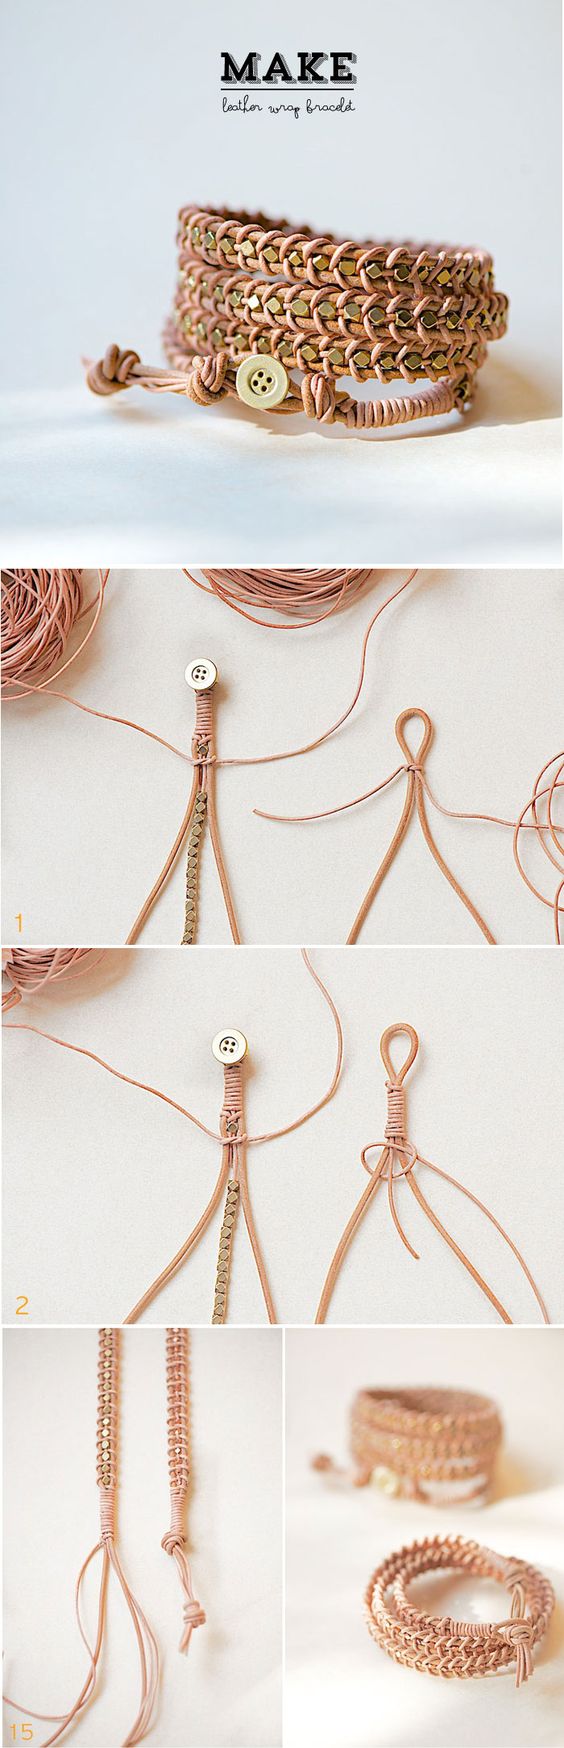 Easy DIY Ideas To Make Your Next Spring Bracelet